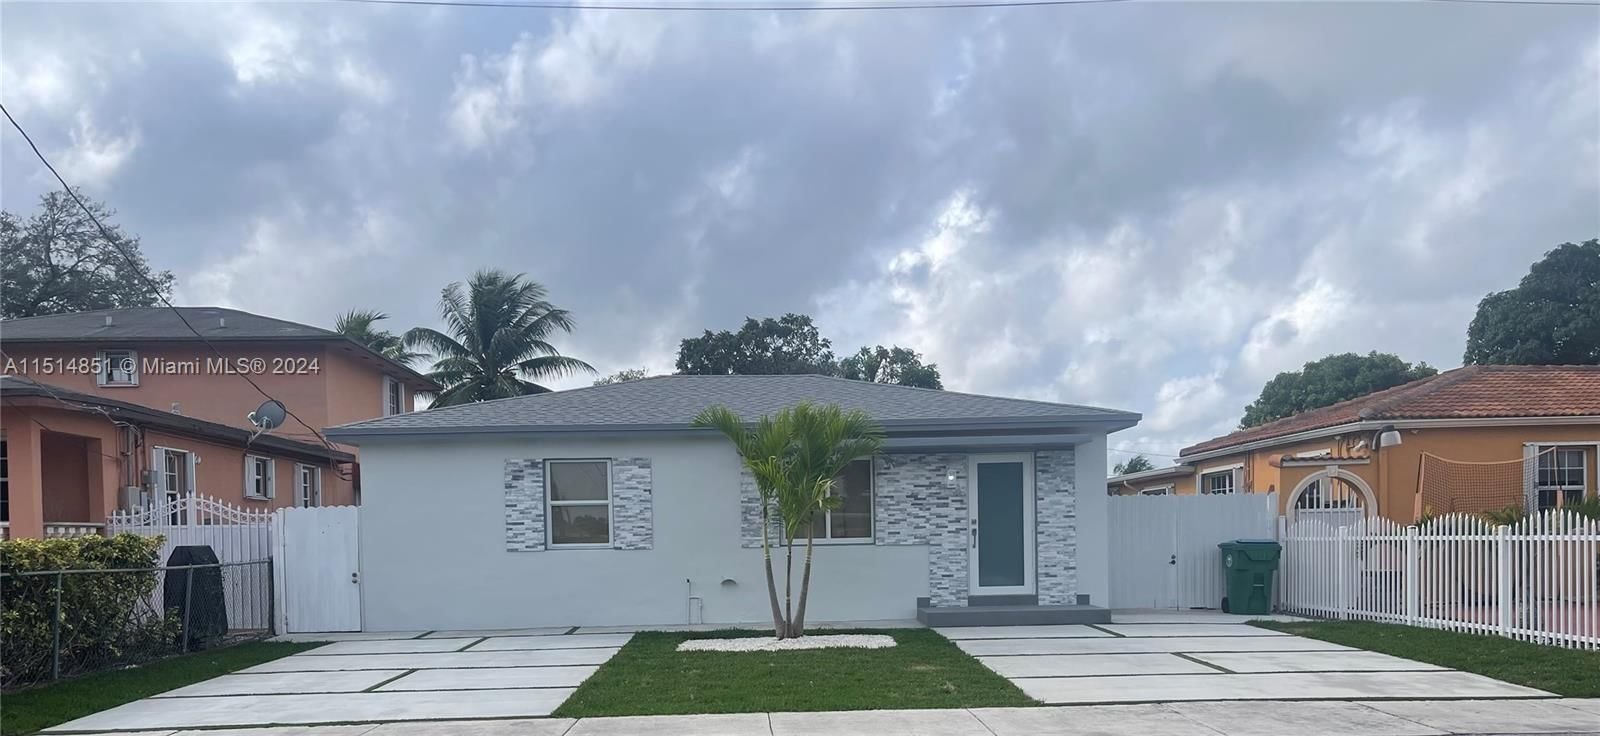 Real estate property located at 516 66th Ave, Miami-Dade County, FAIRLAWN, Miami, FL